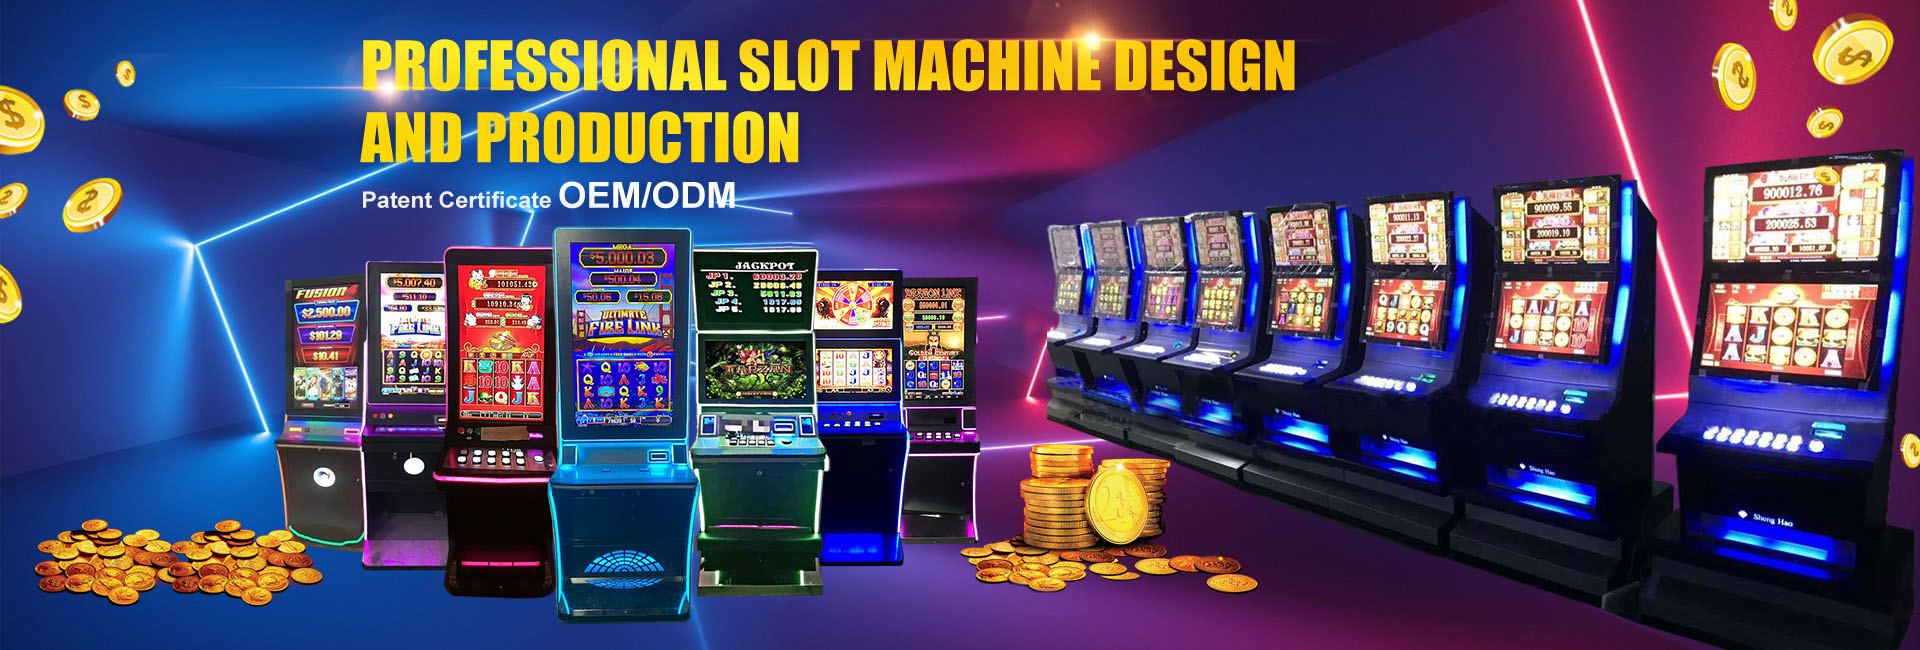 Our Slot Machine01